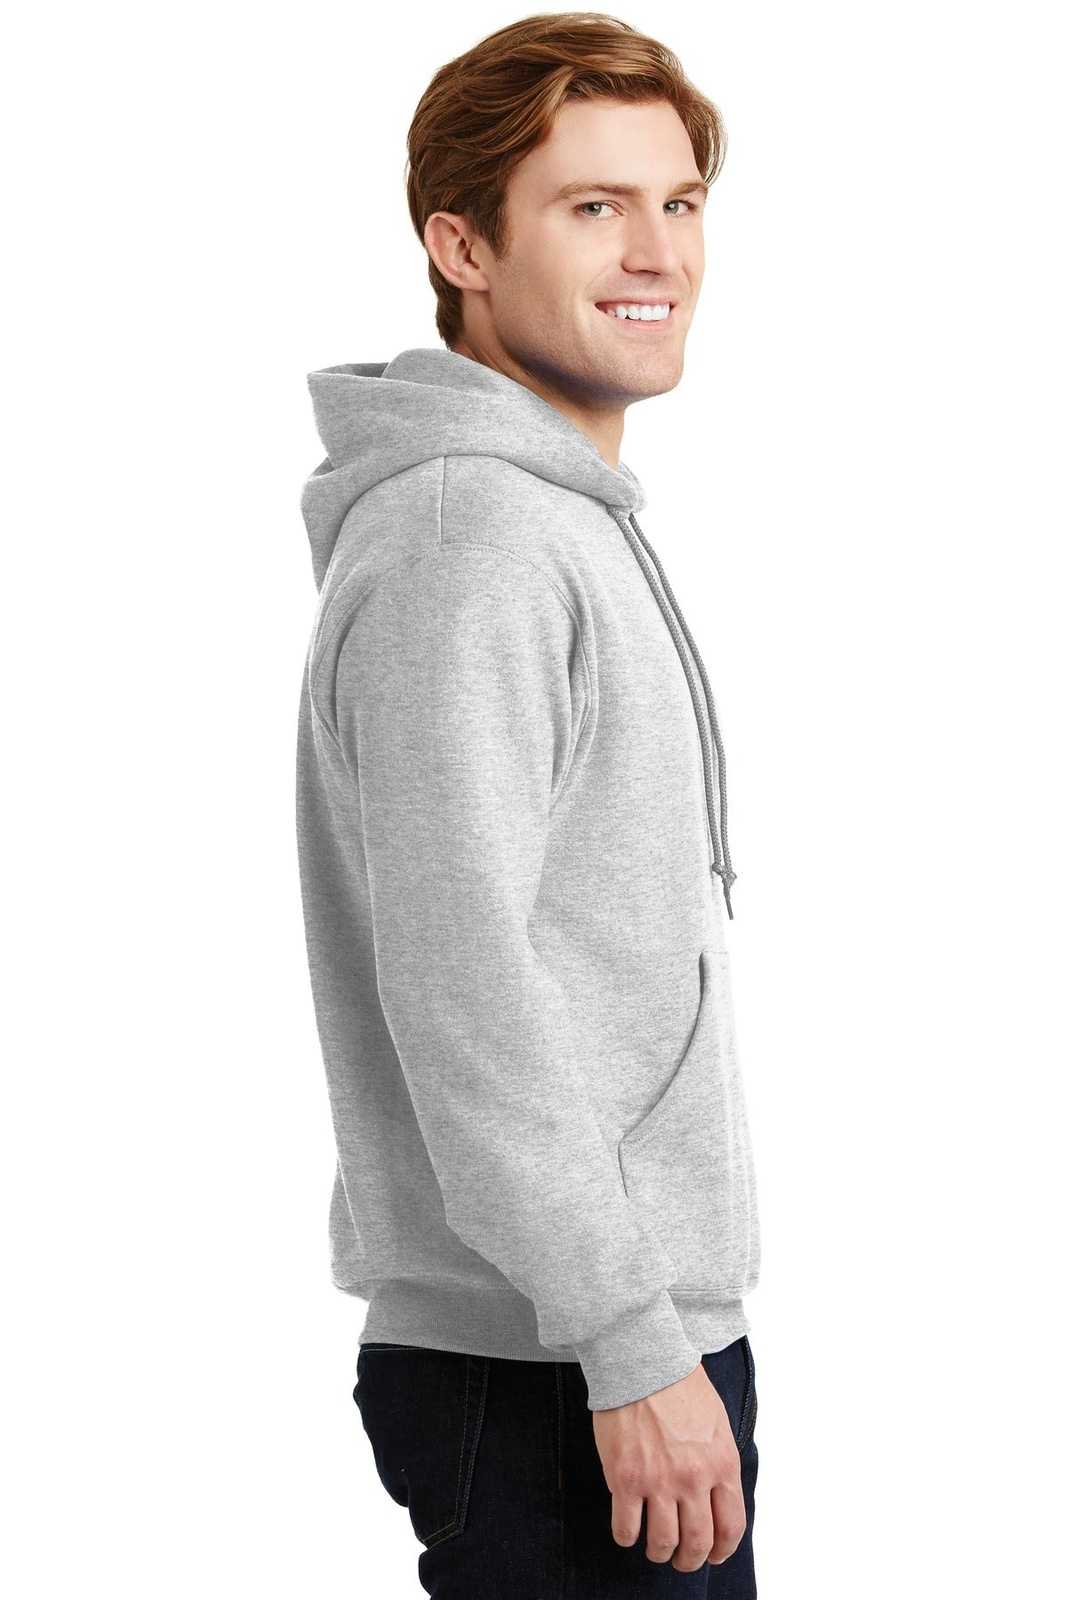 Jerzees 4997M Super Sweats Nublend Pullover Hooded Sweatshirt - Ash - HIT a Double